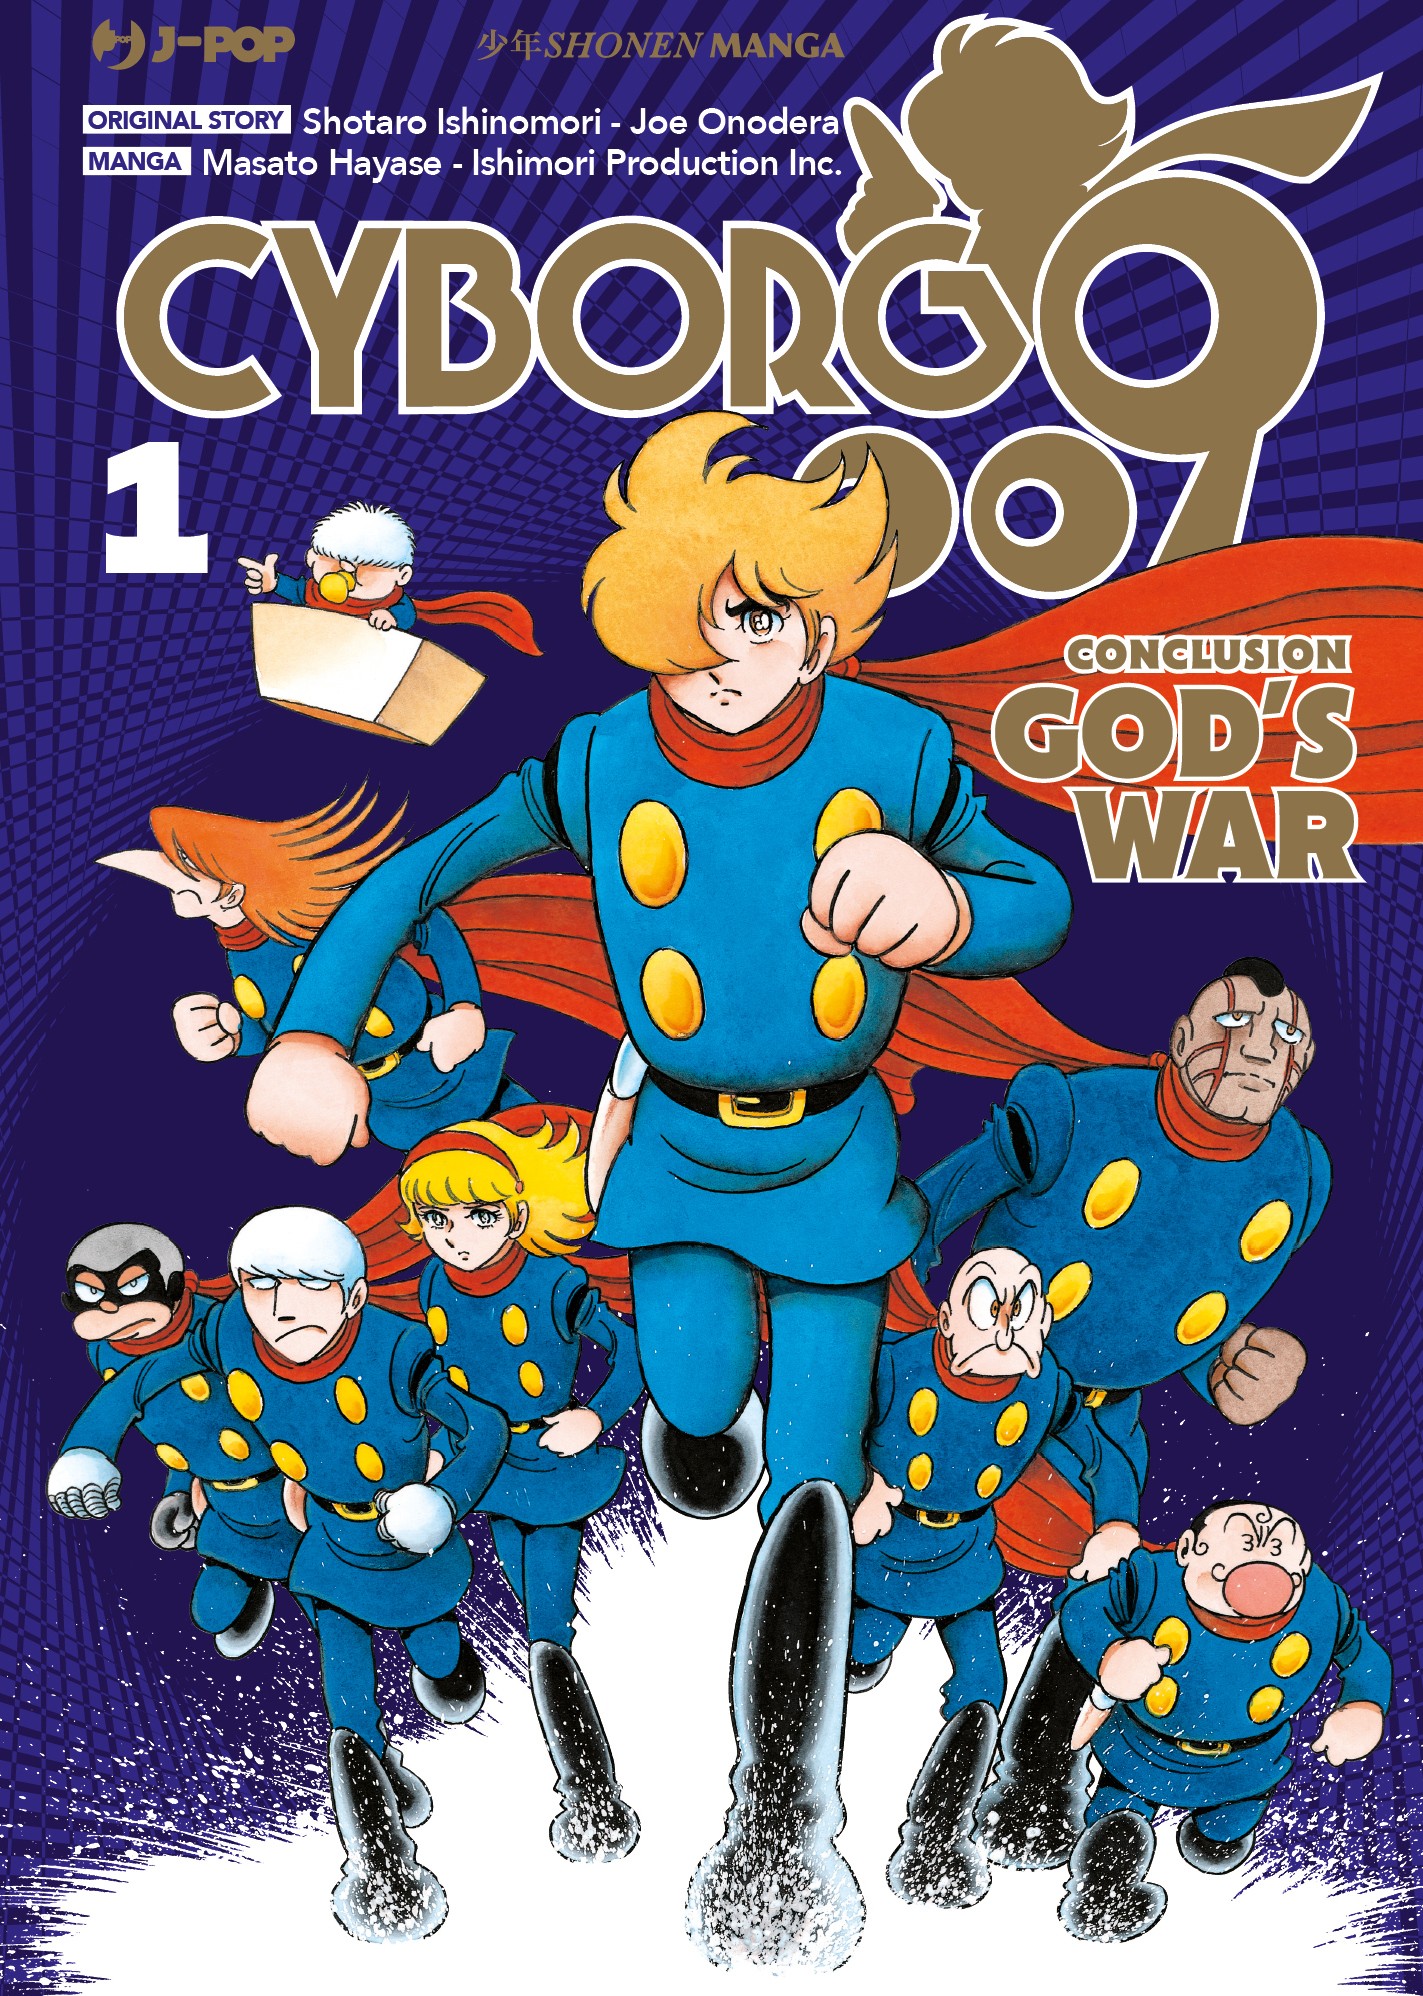 Cyborg 009 Conclusion: God